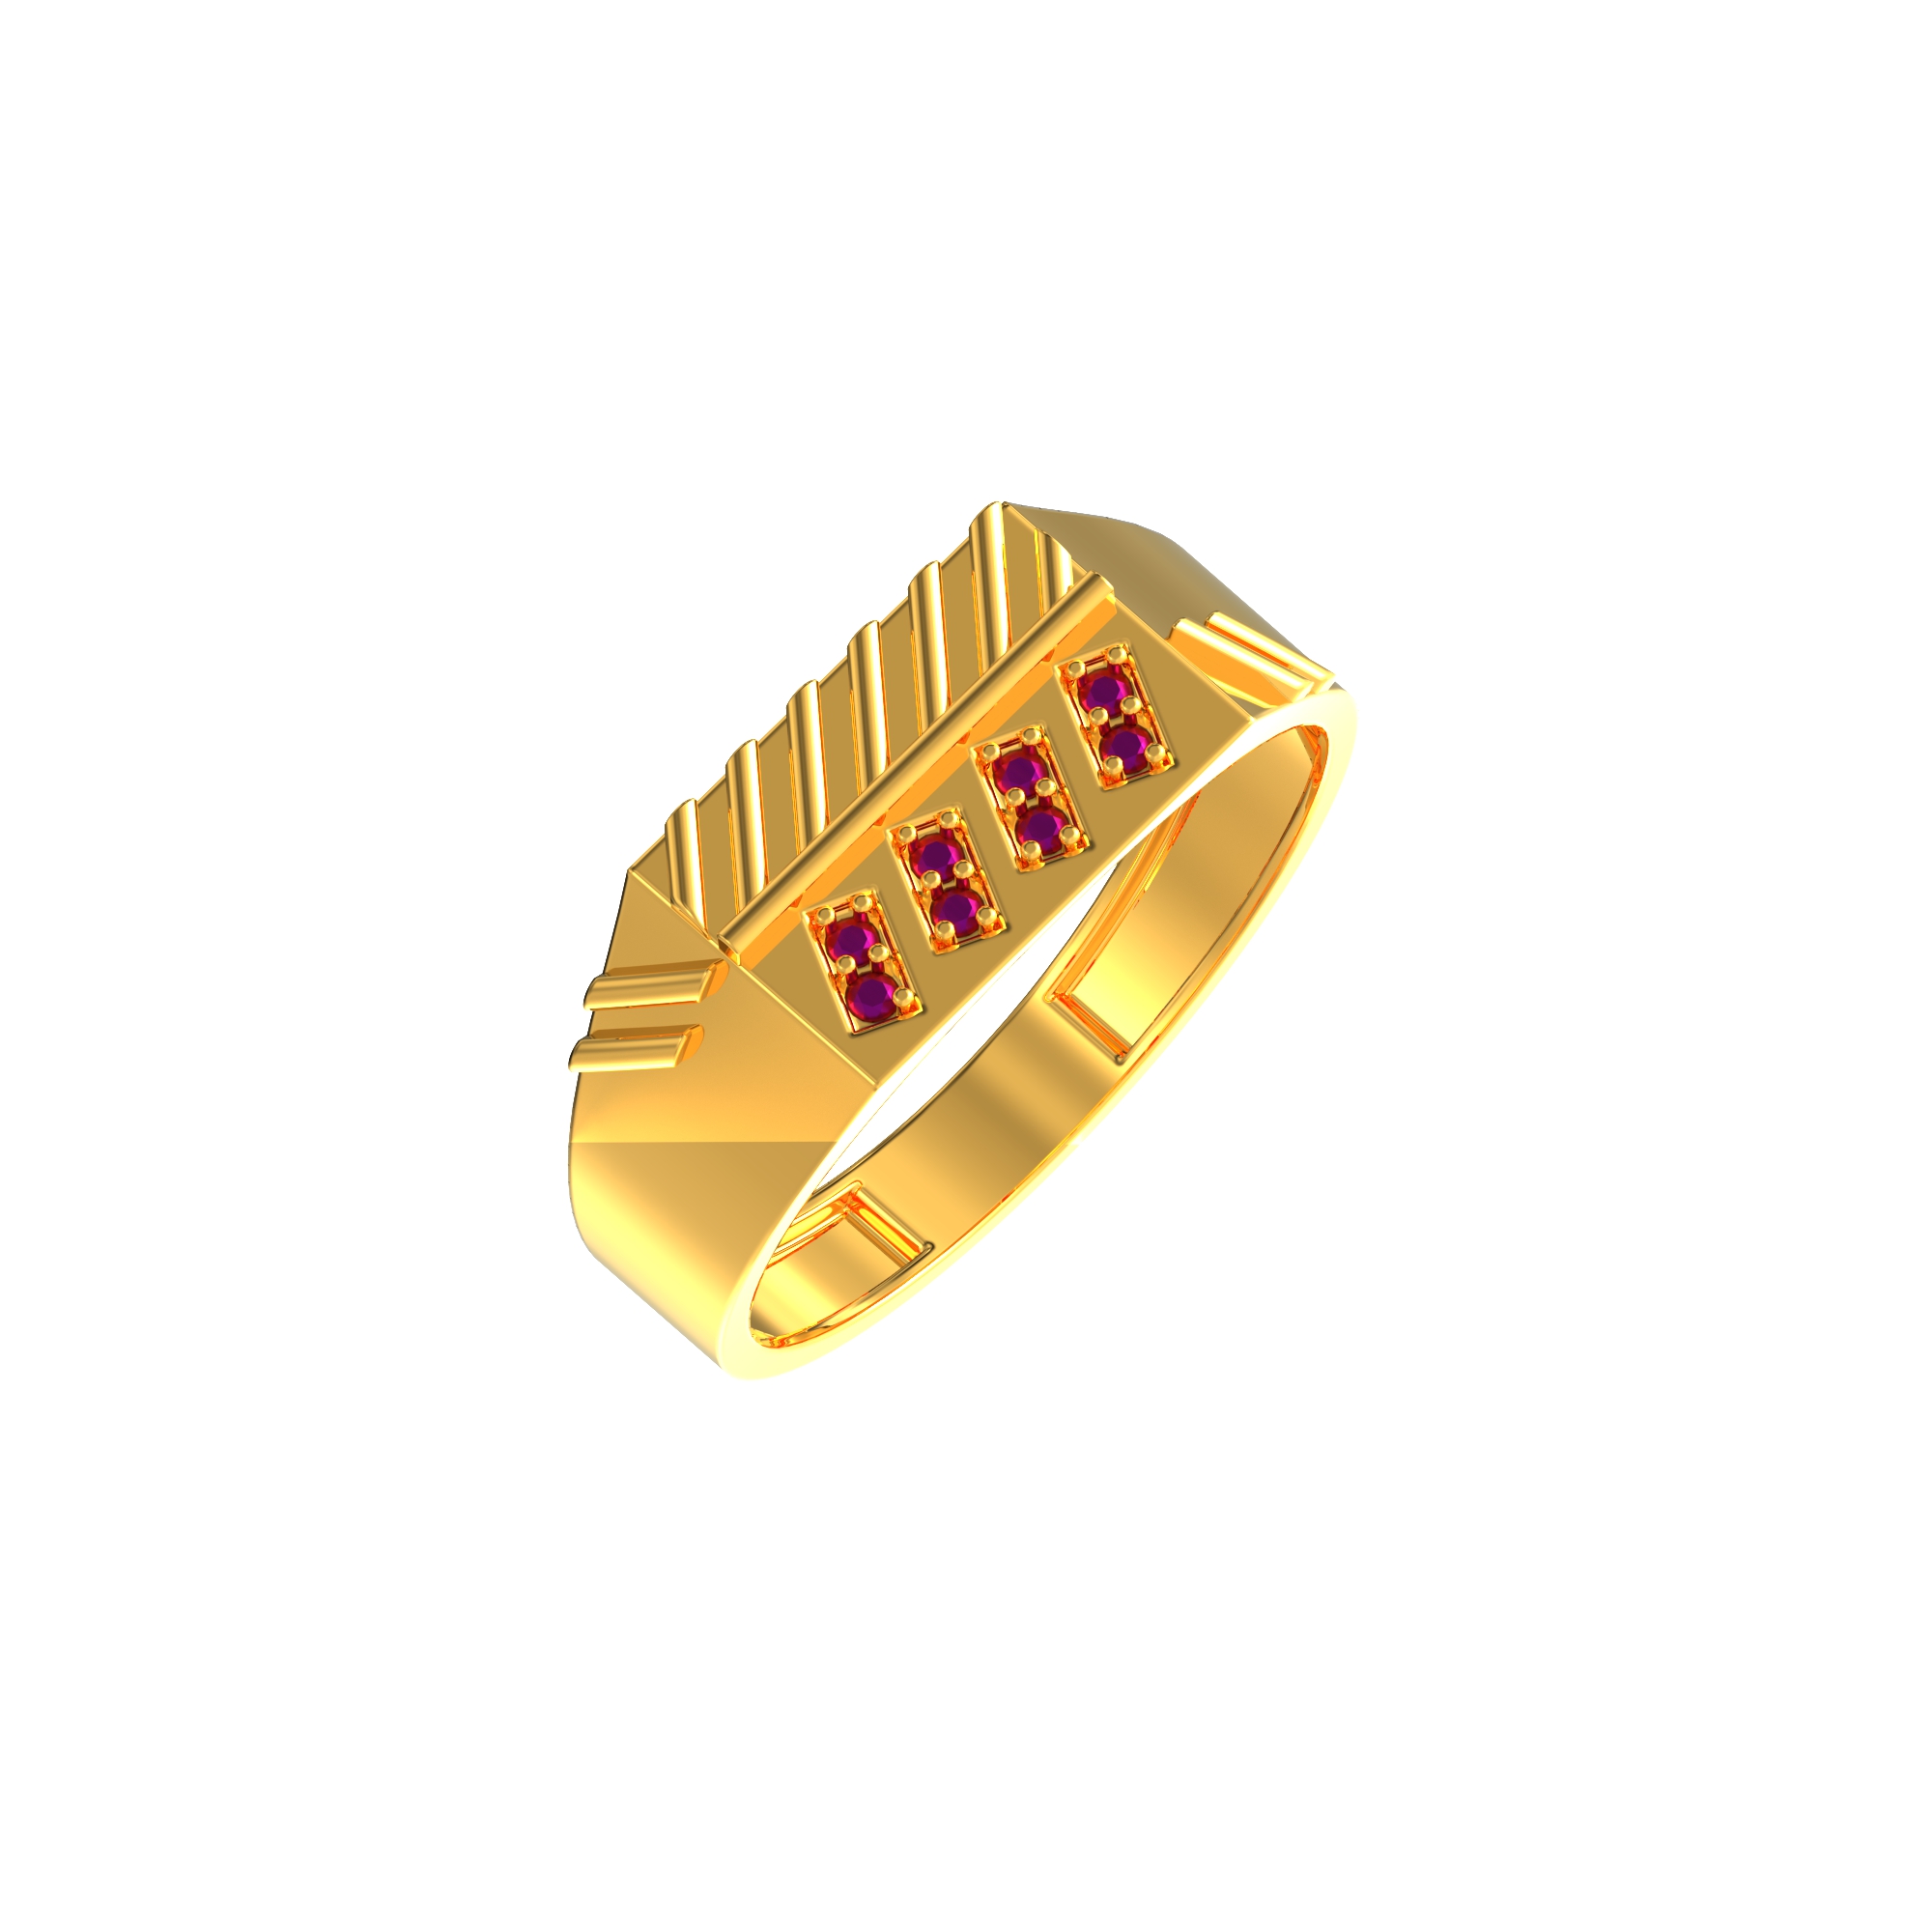 Gold men ring design 2023 || Mens gold ring new design 2023 || rings for men  || Gold men ring design - YouTube